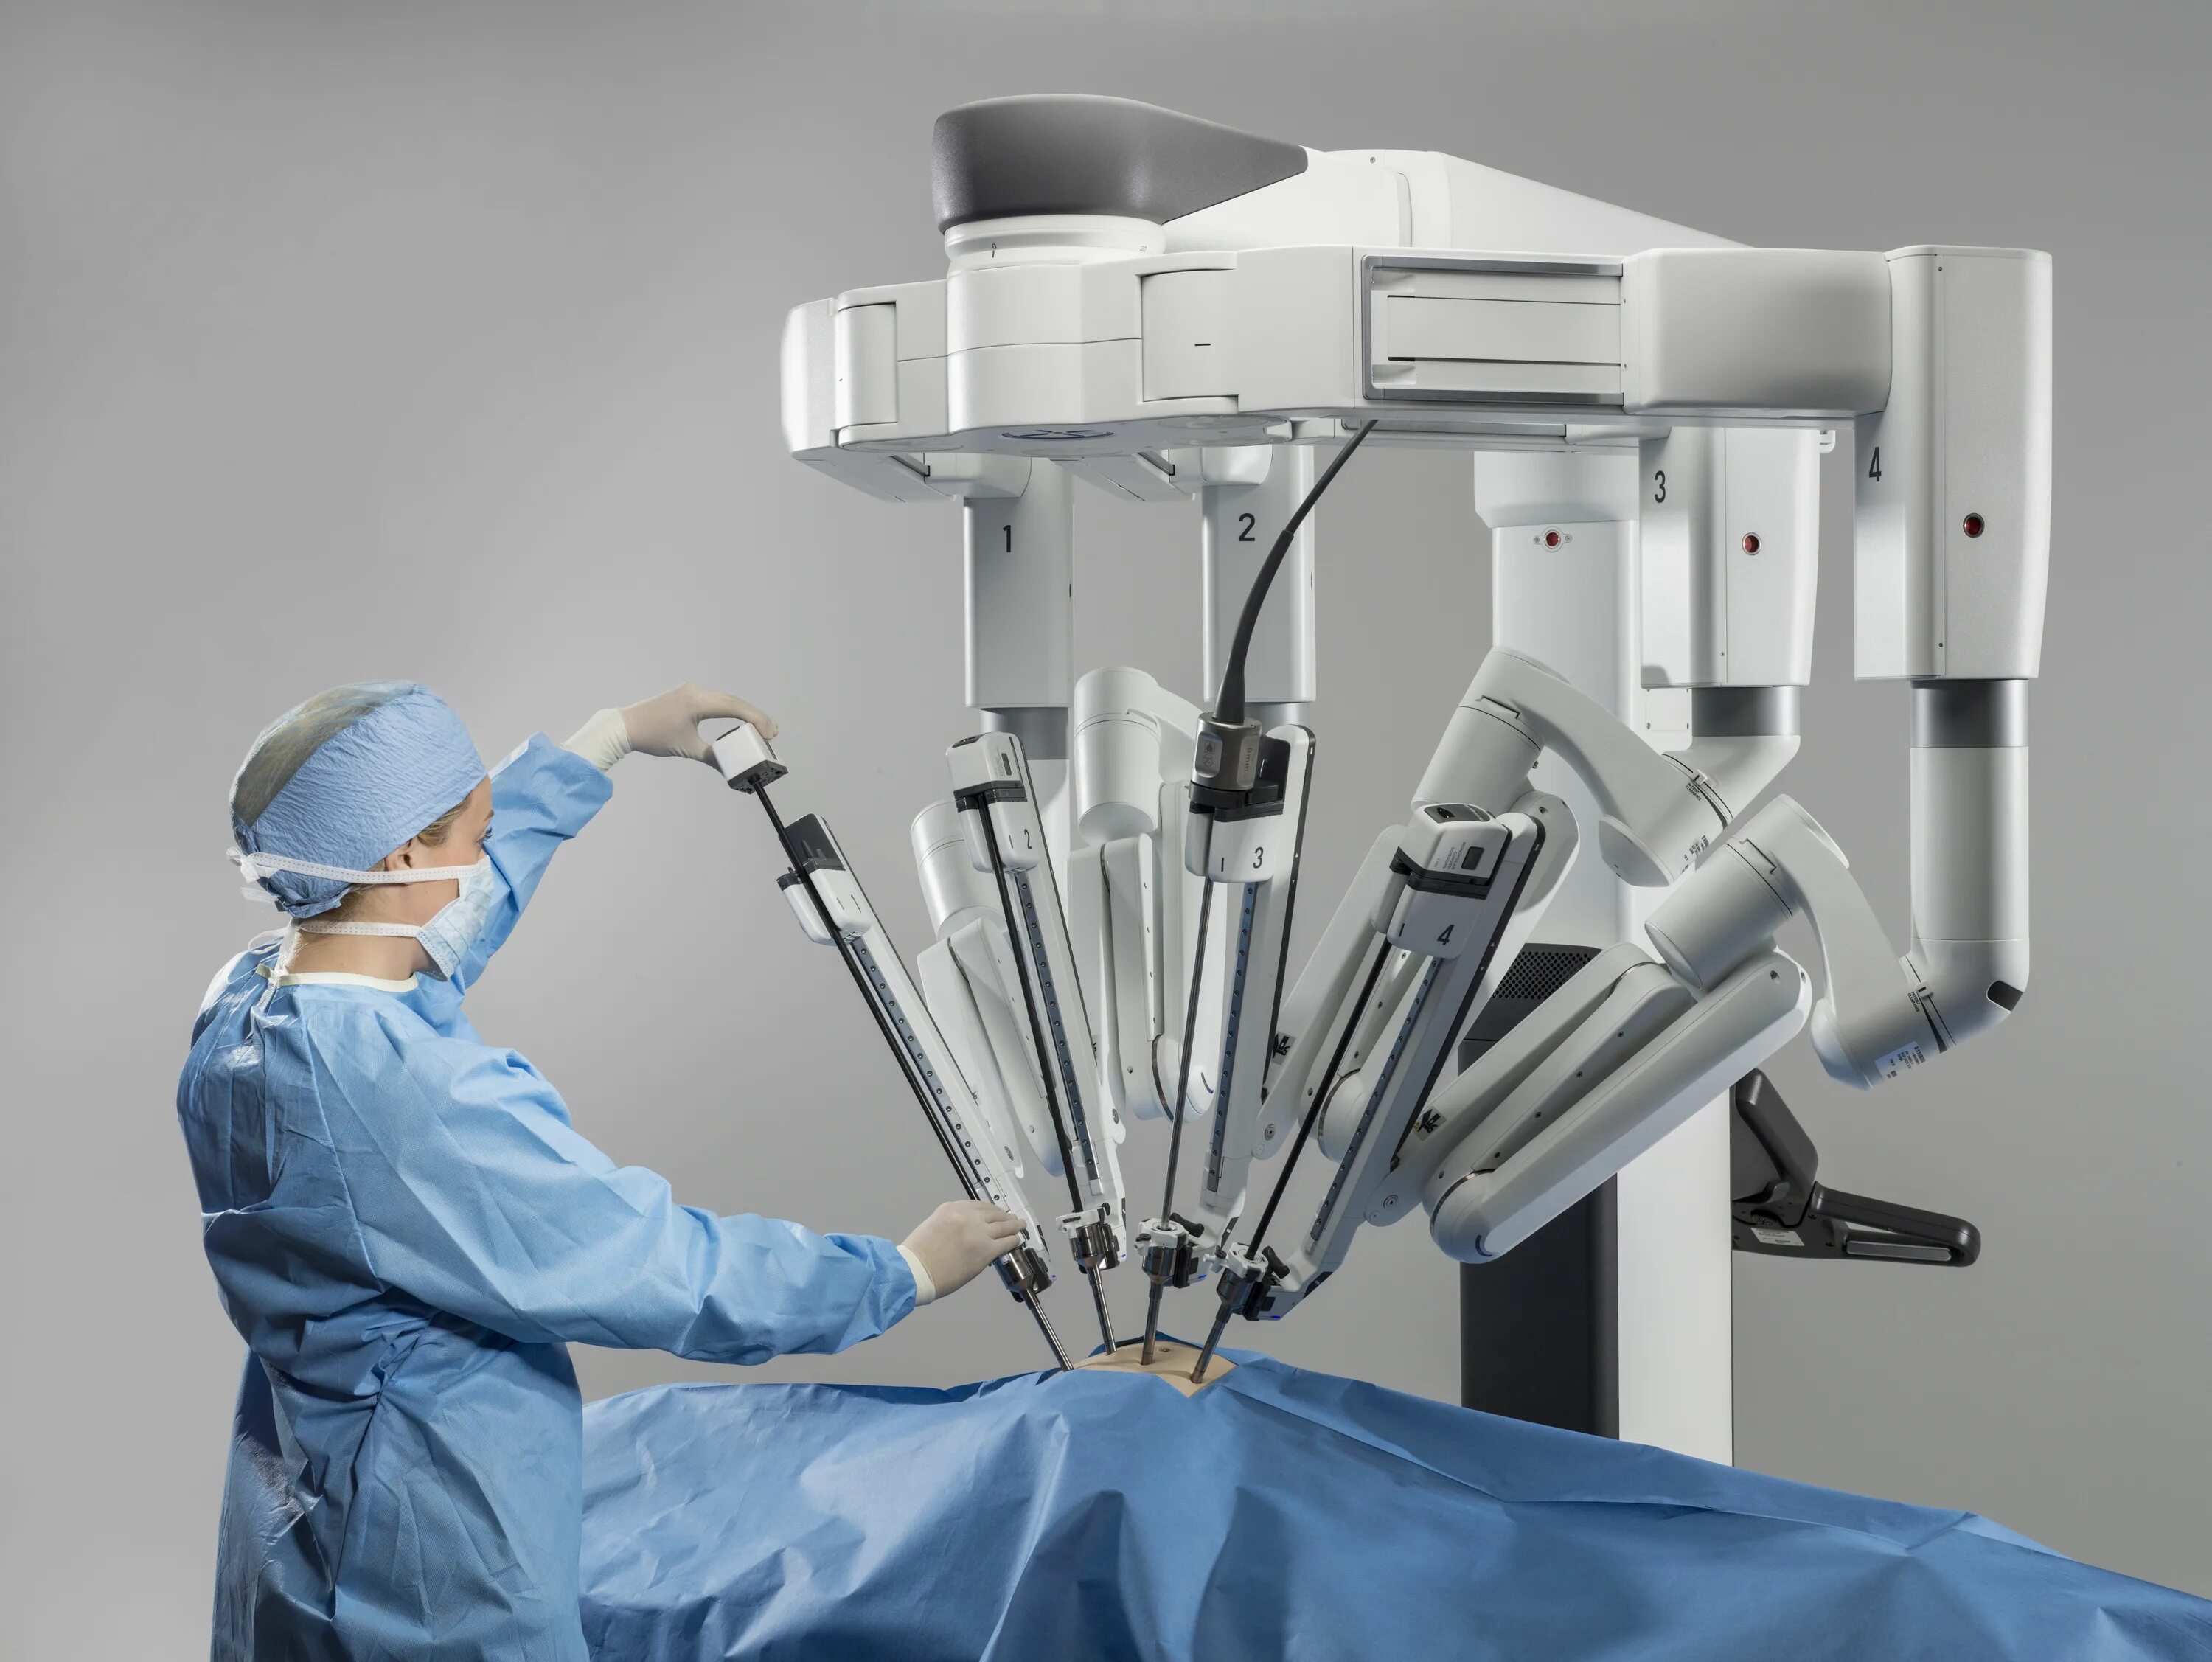 Робот-хирург da Vinci (да Винчи). Da Vinci операционный робот. Хирургический робот DAVINCI. Роботизированная хирургическая система da Vinci.